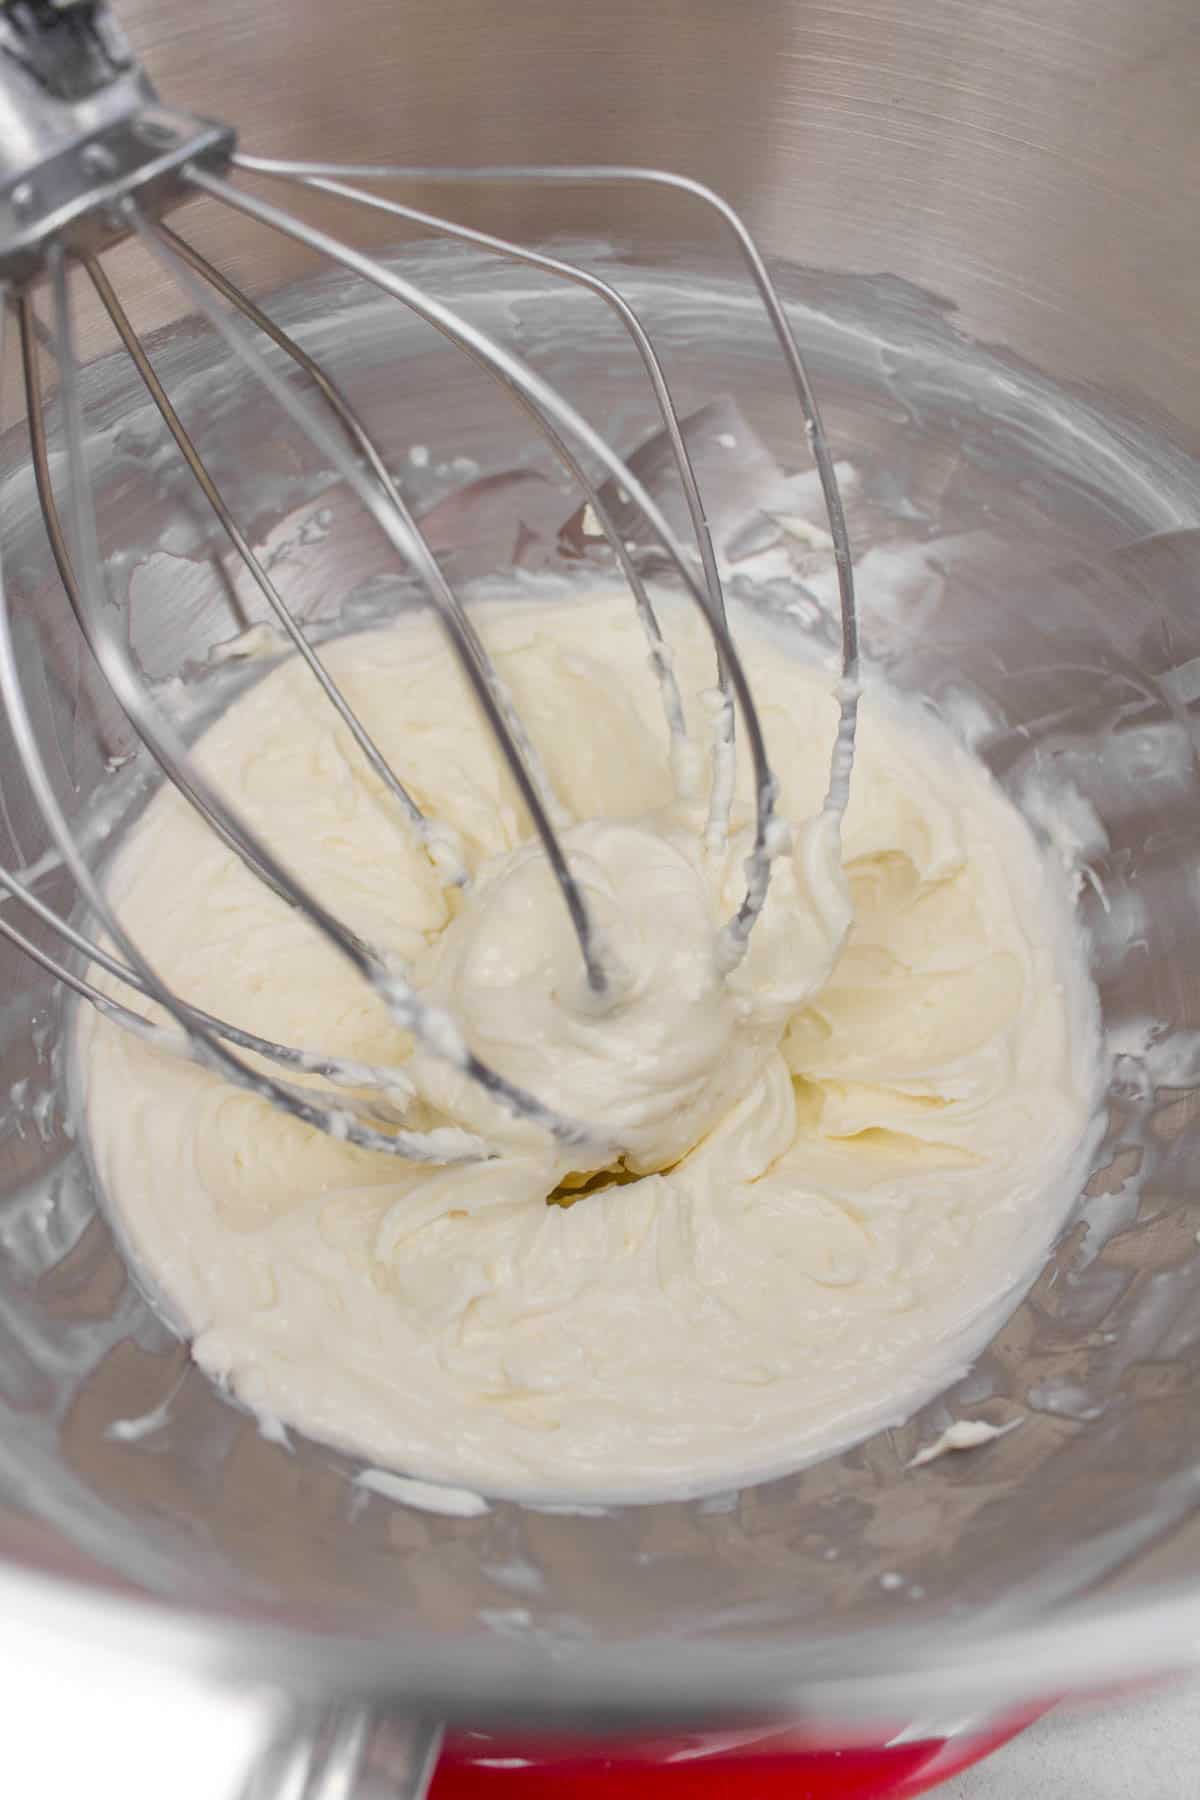 Cream cheese mixture beaten in a mixer.